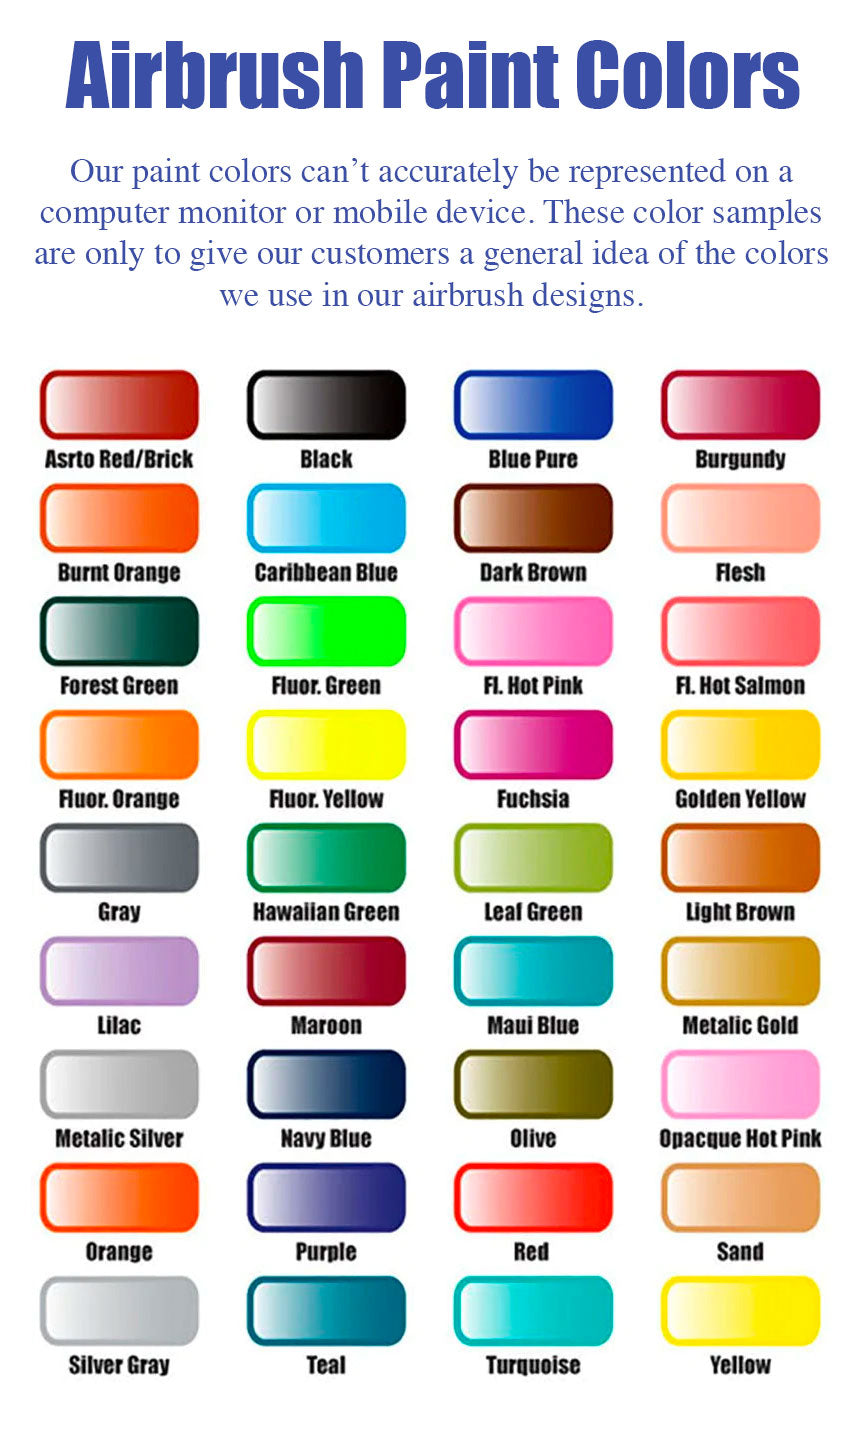 Airbrush T-shirt - Pet Portrait - Your Pet's Name - Your Choice of Colors